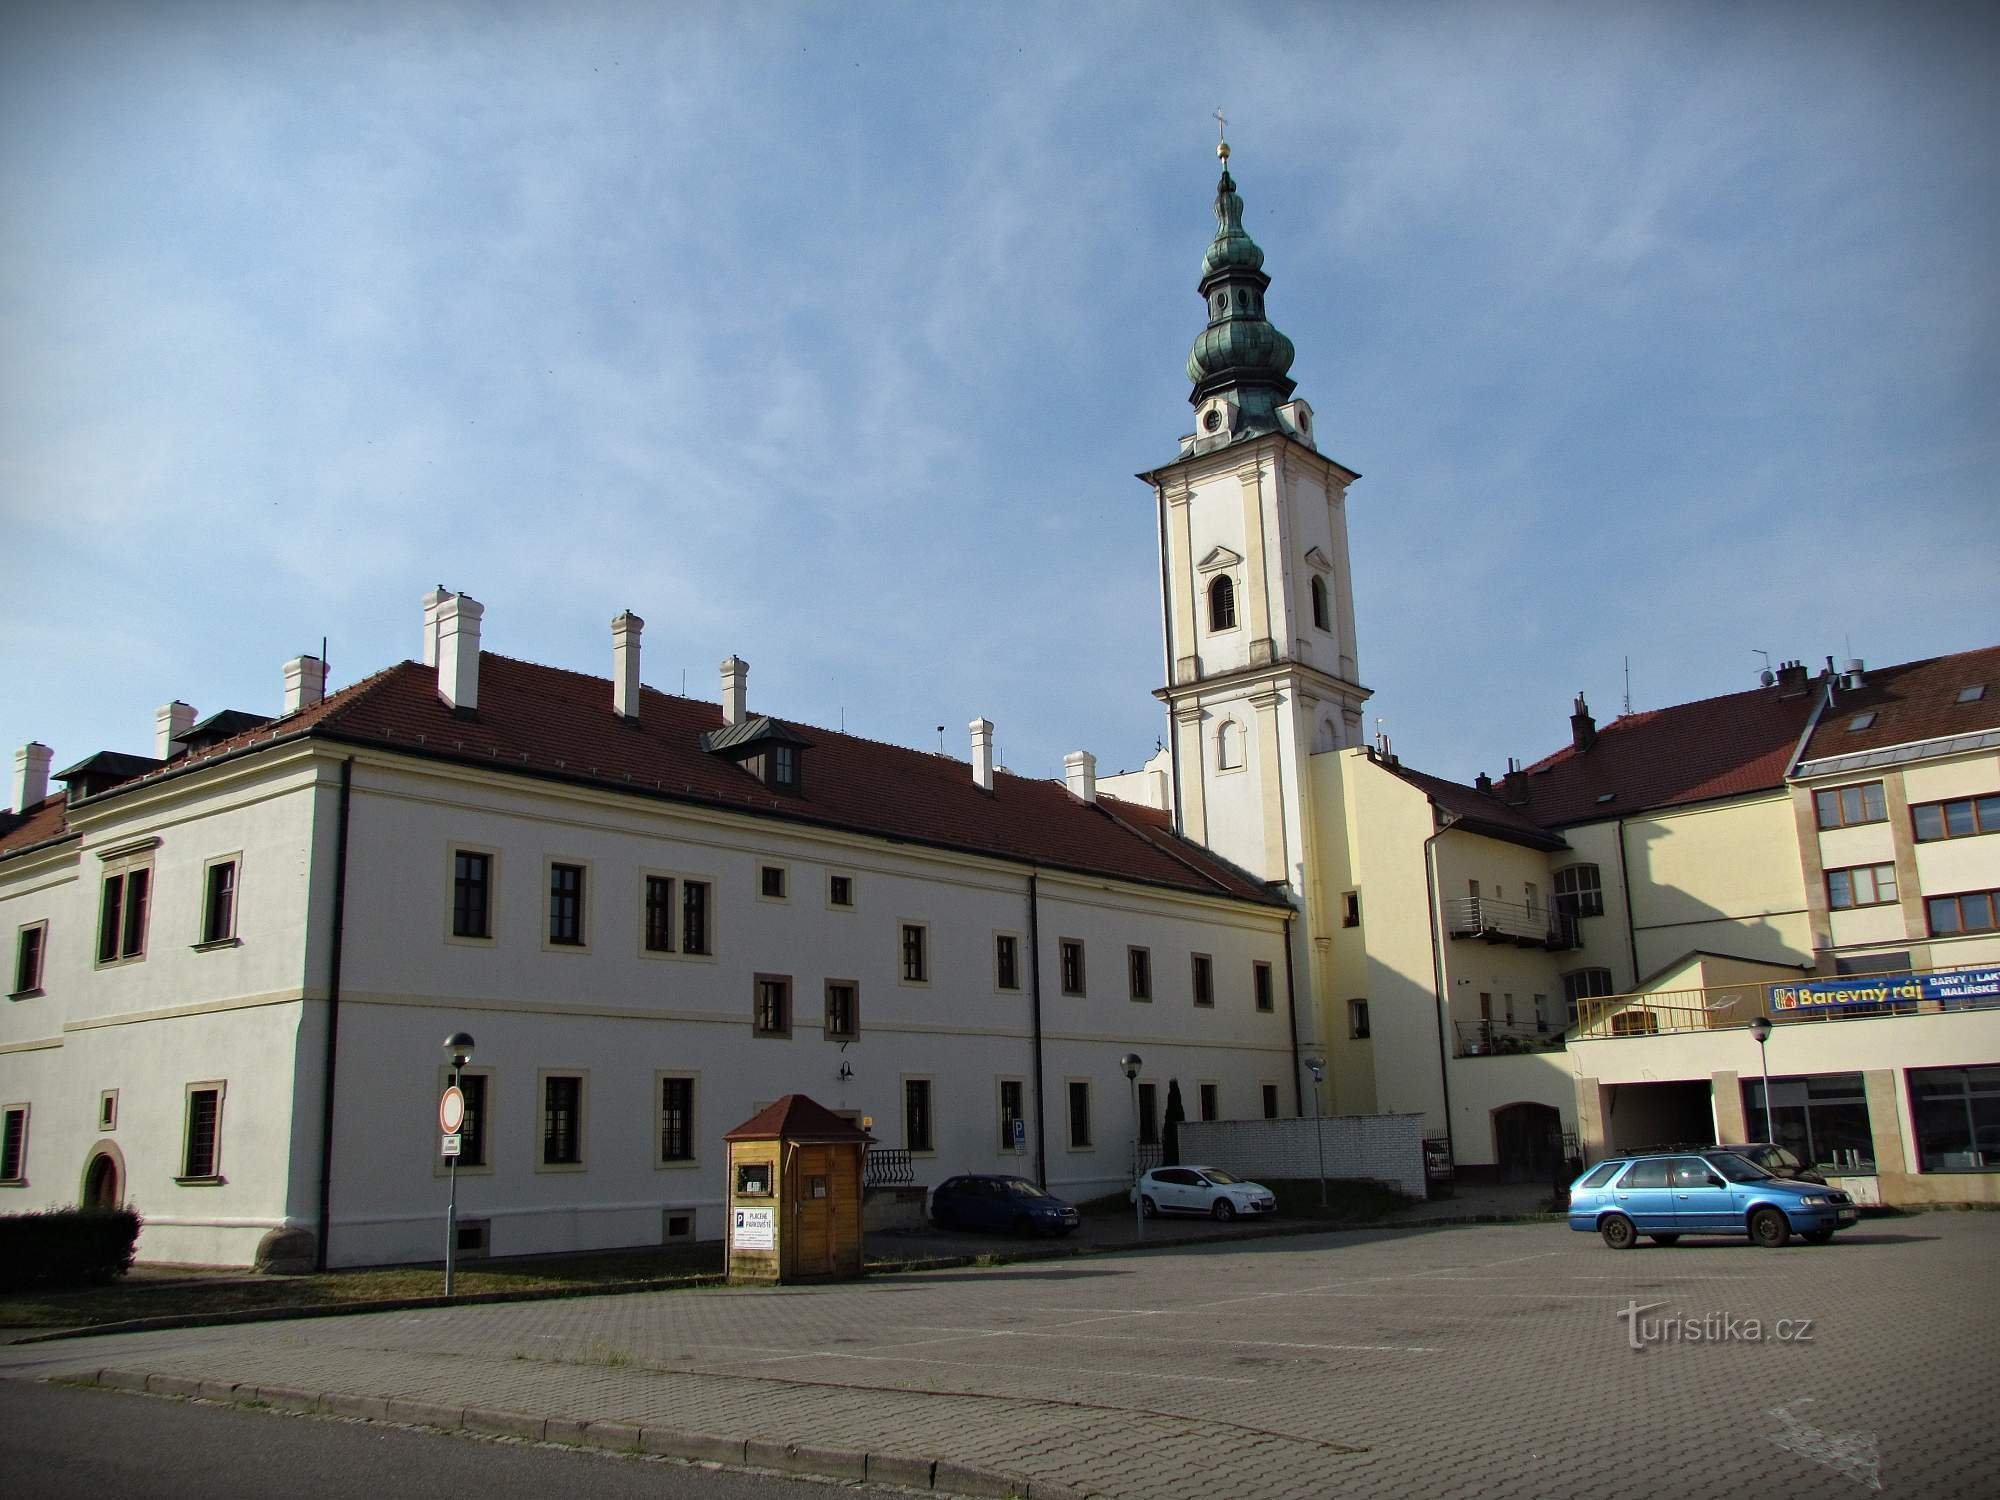 Uherské Hradiště - gebied van het Franciscaner klooster en de kerk